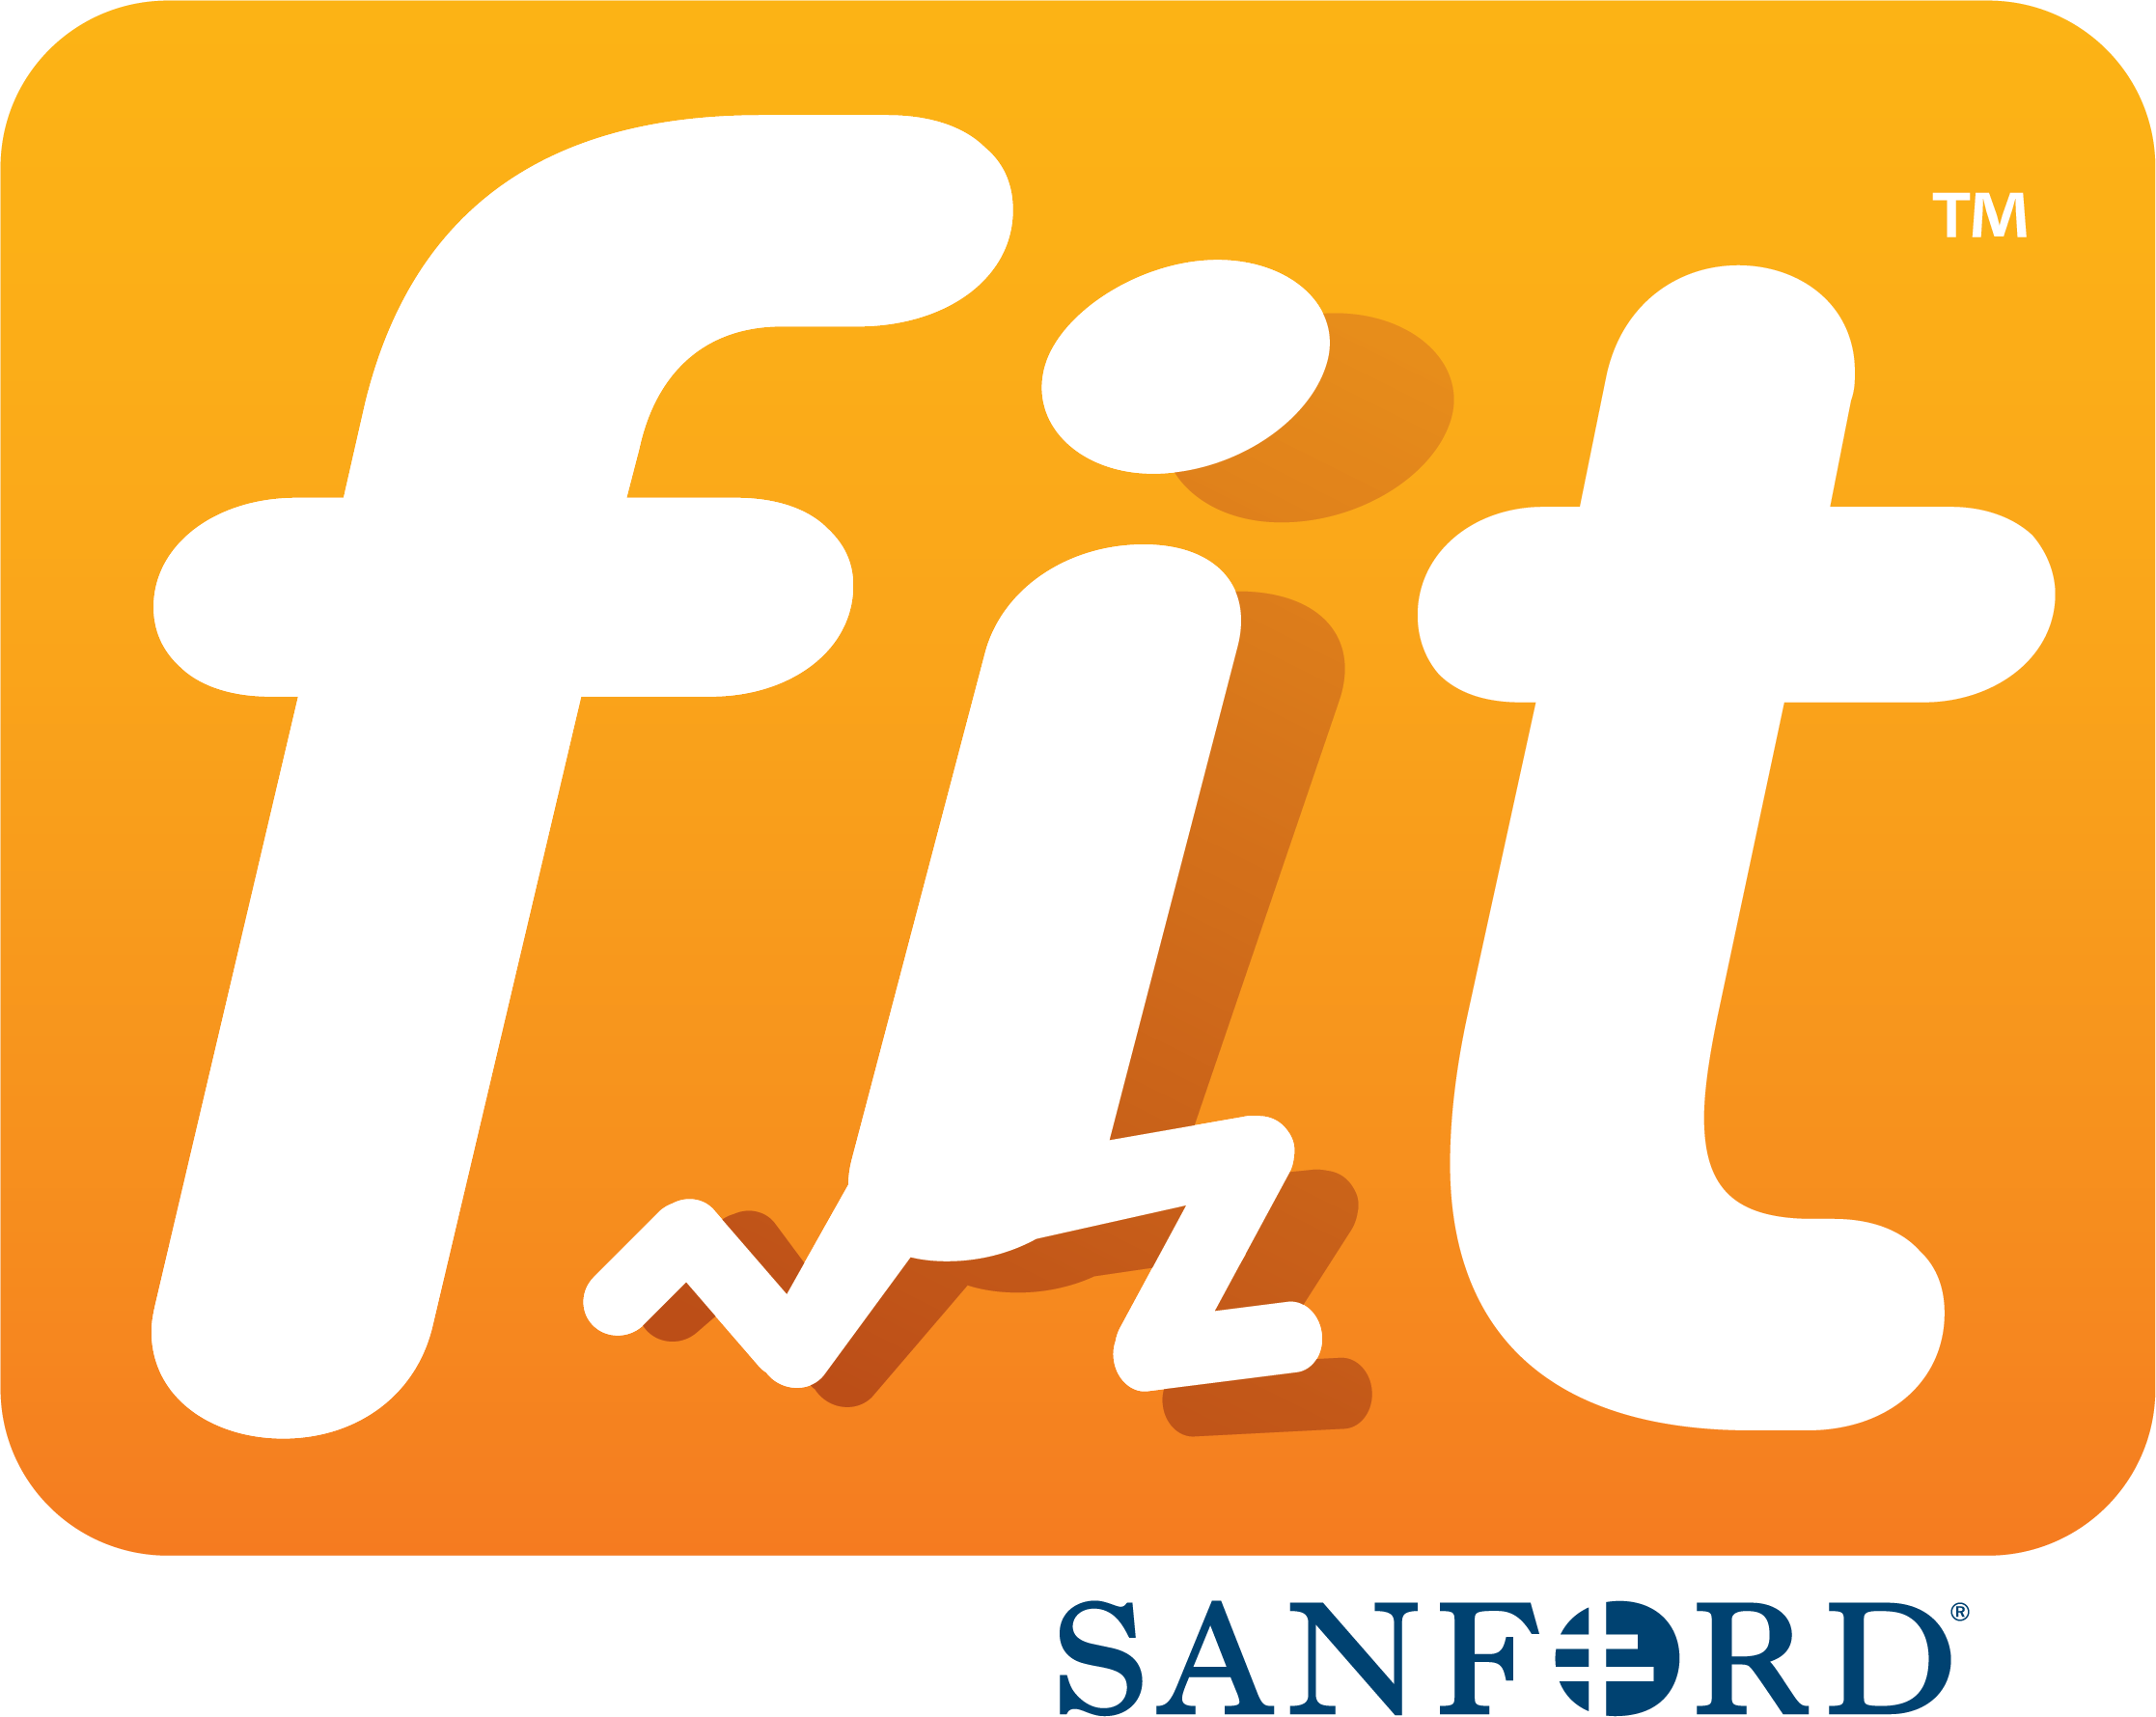 Sanford fit